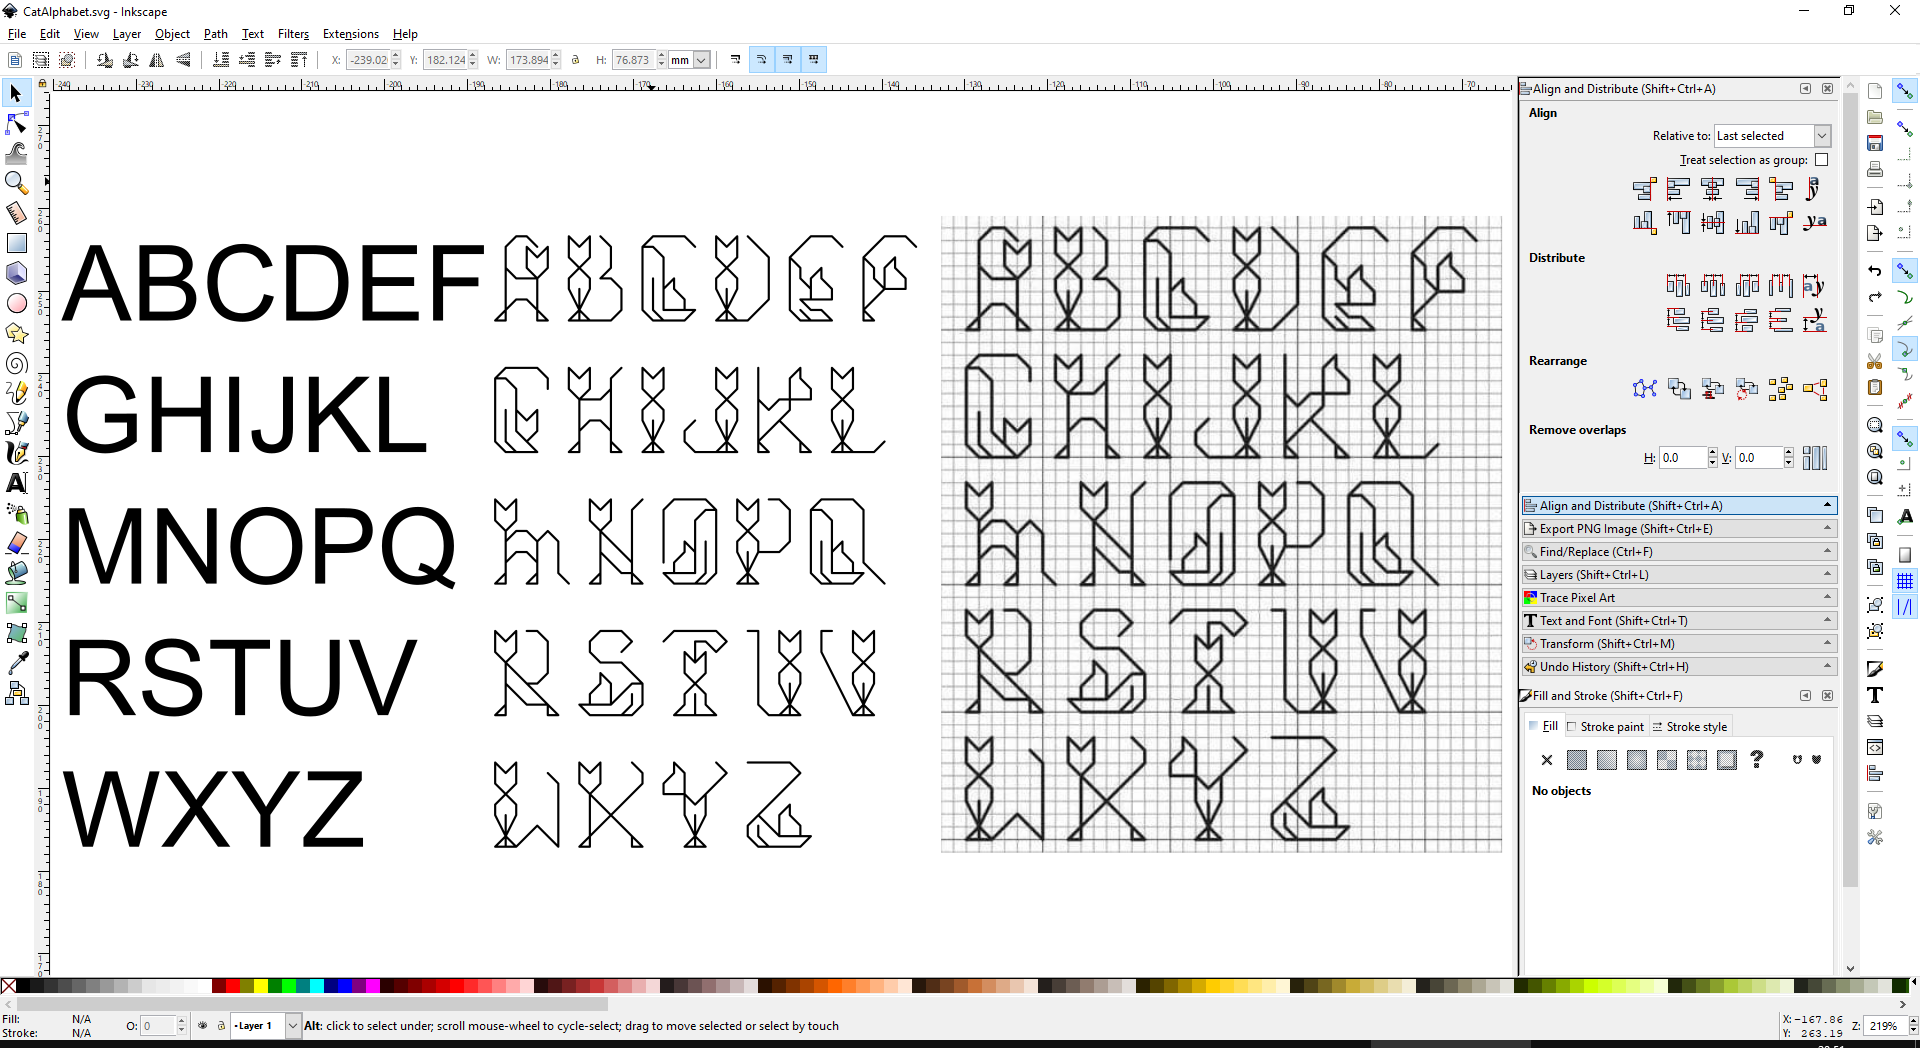 Cat Alphabet and SVG fonts